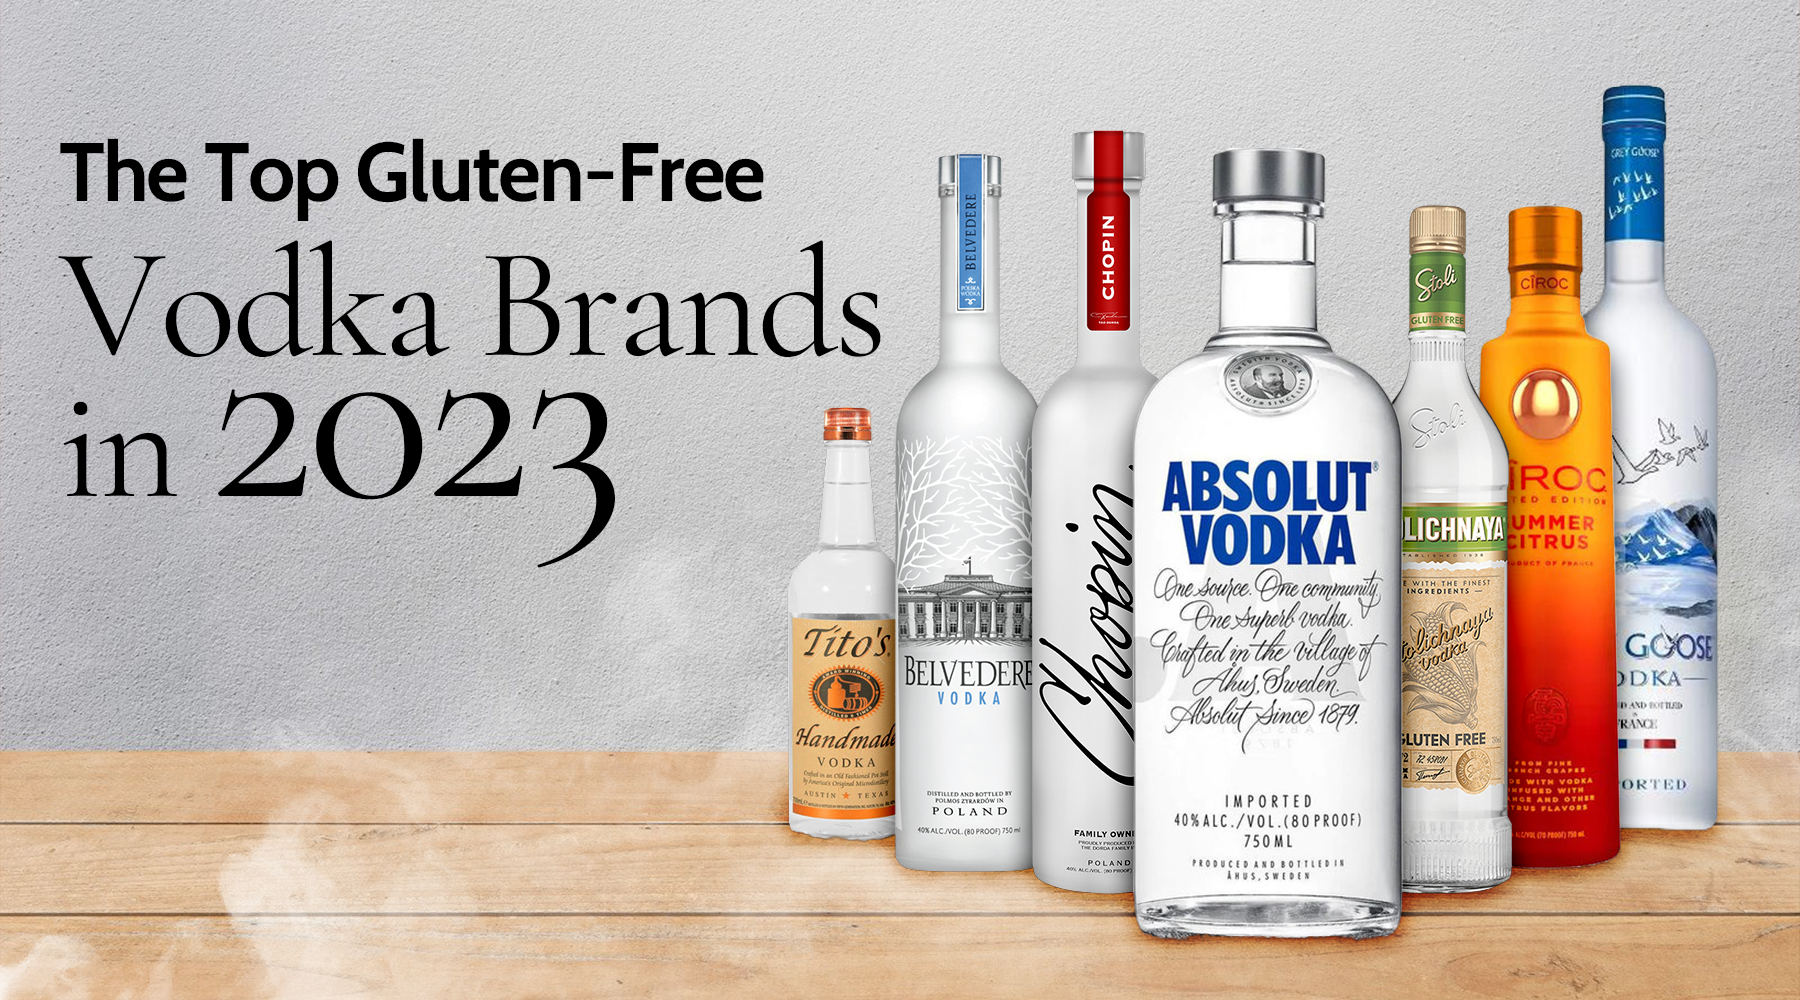 The Top Gluten-Free Vodka Brands in 2023